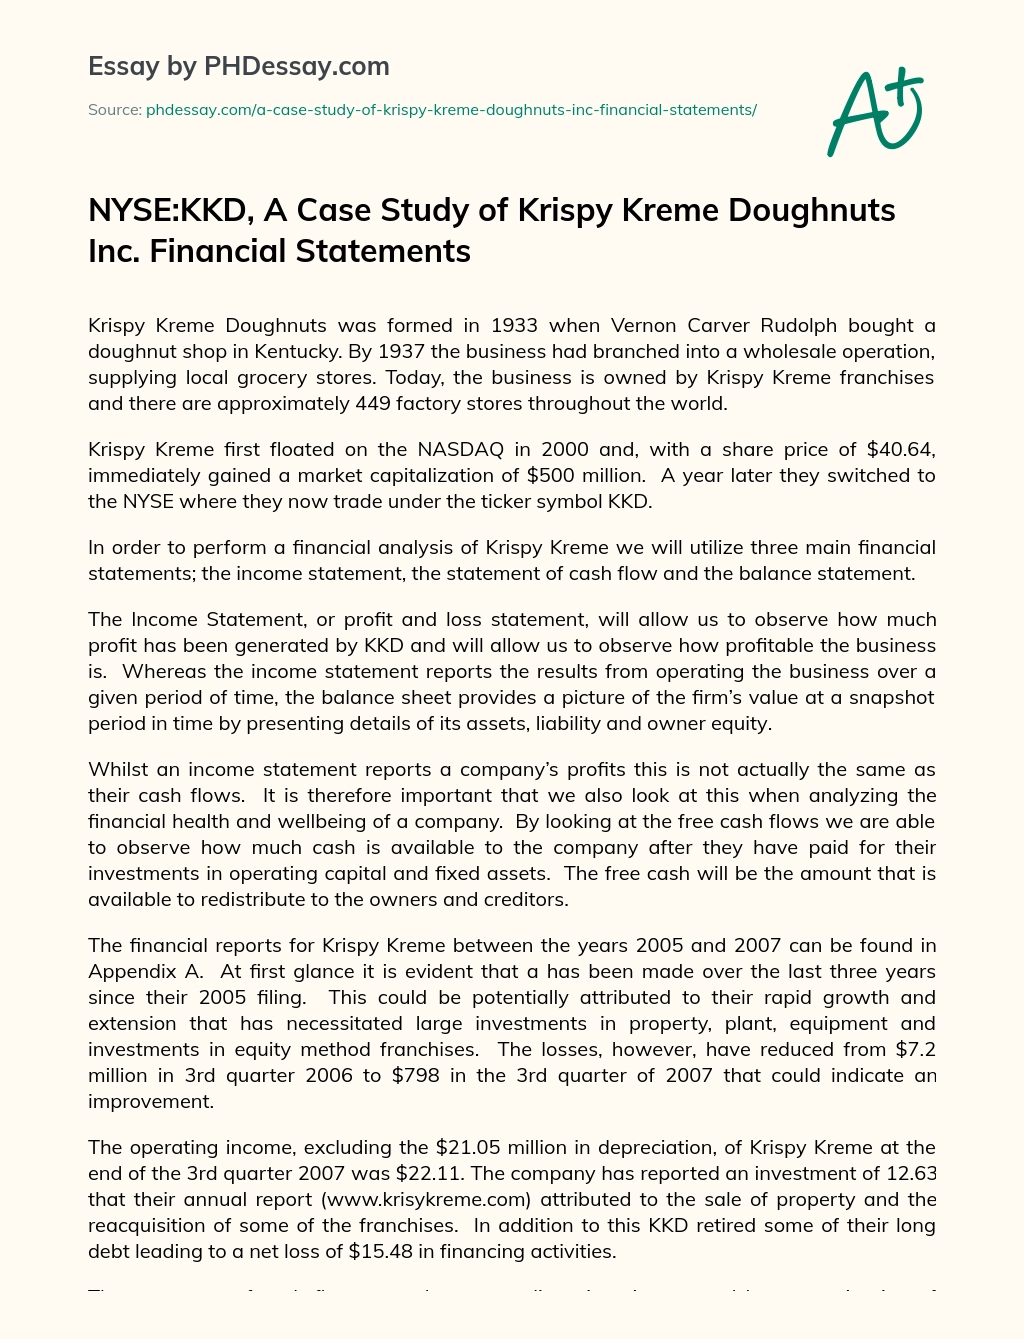 NYSE:KKD, A Case Study of Krispy Kreme Doughnuts Inc. Financial Statements essay